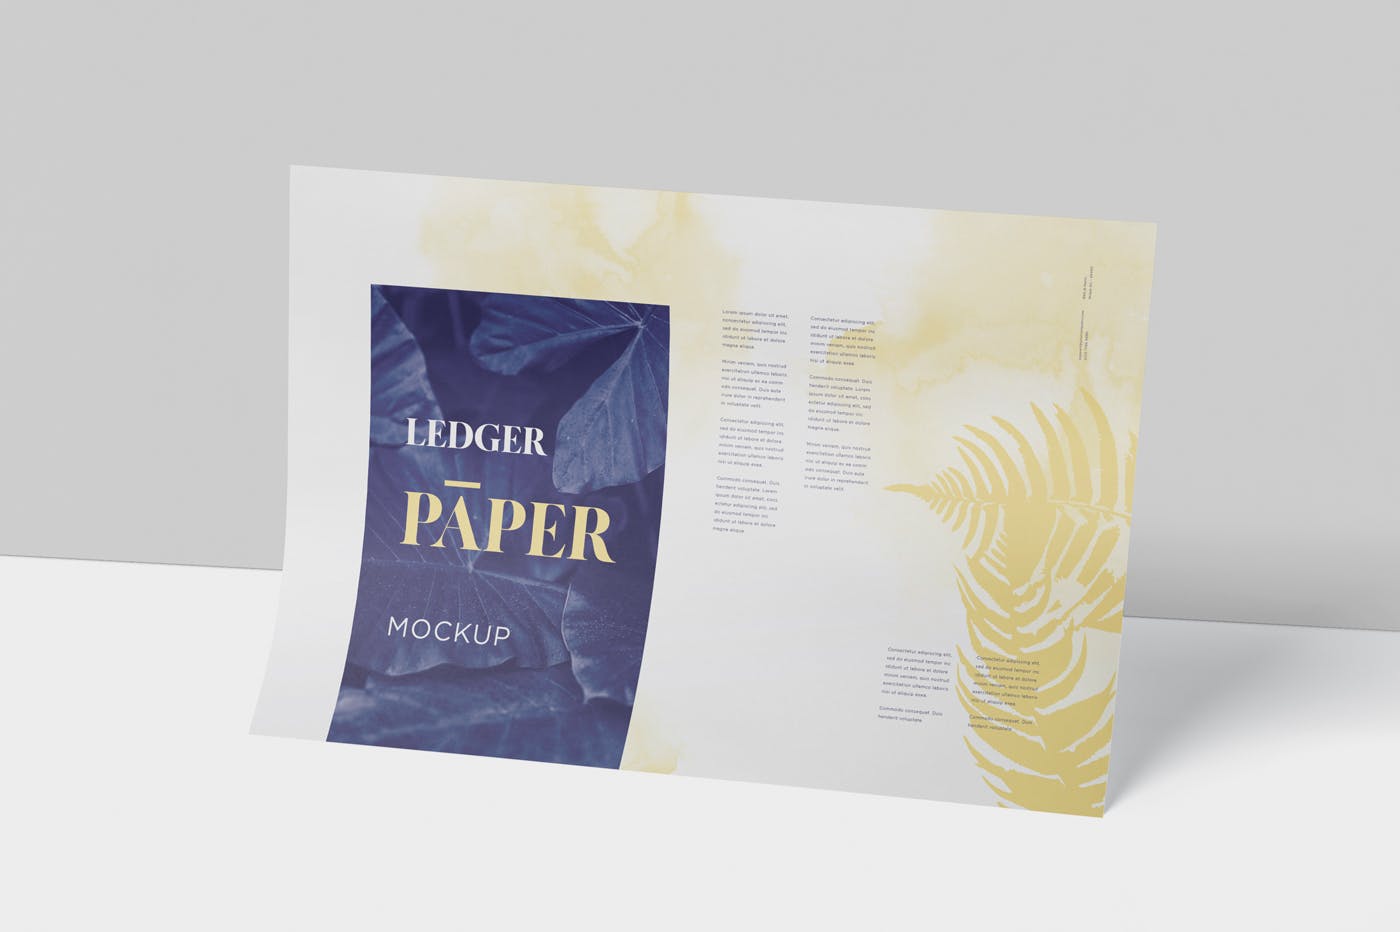 印刷品设计效果图样机第一素材精选模板 Ledger Paper Mockup – 17×11 Inch Size插图(3)